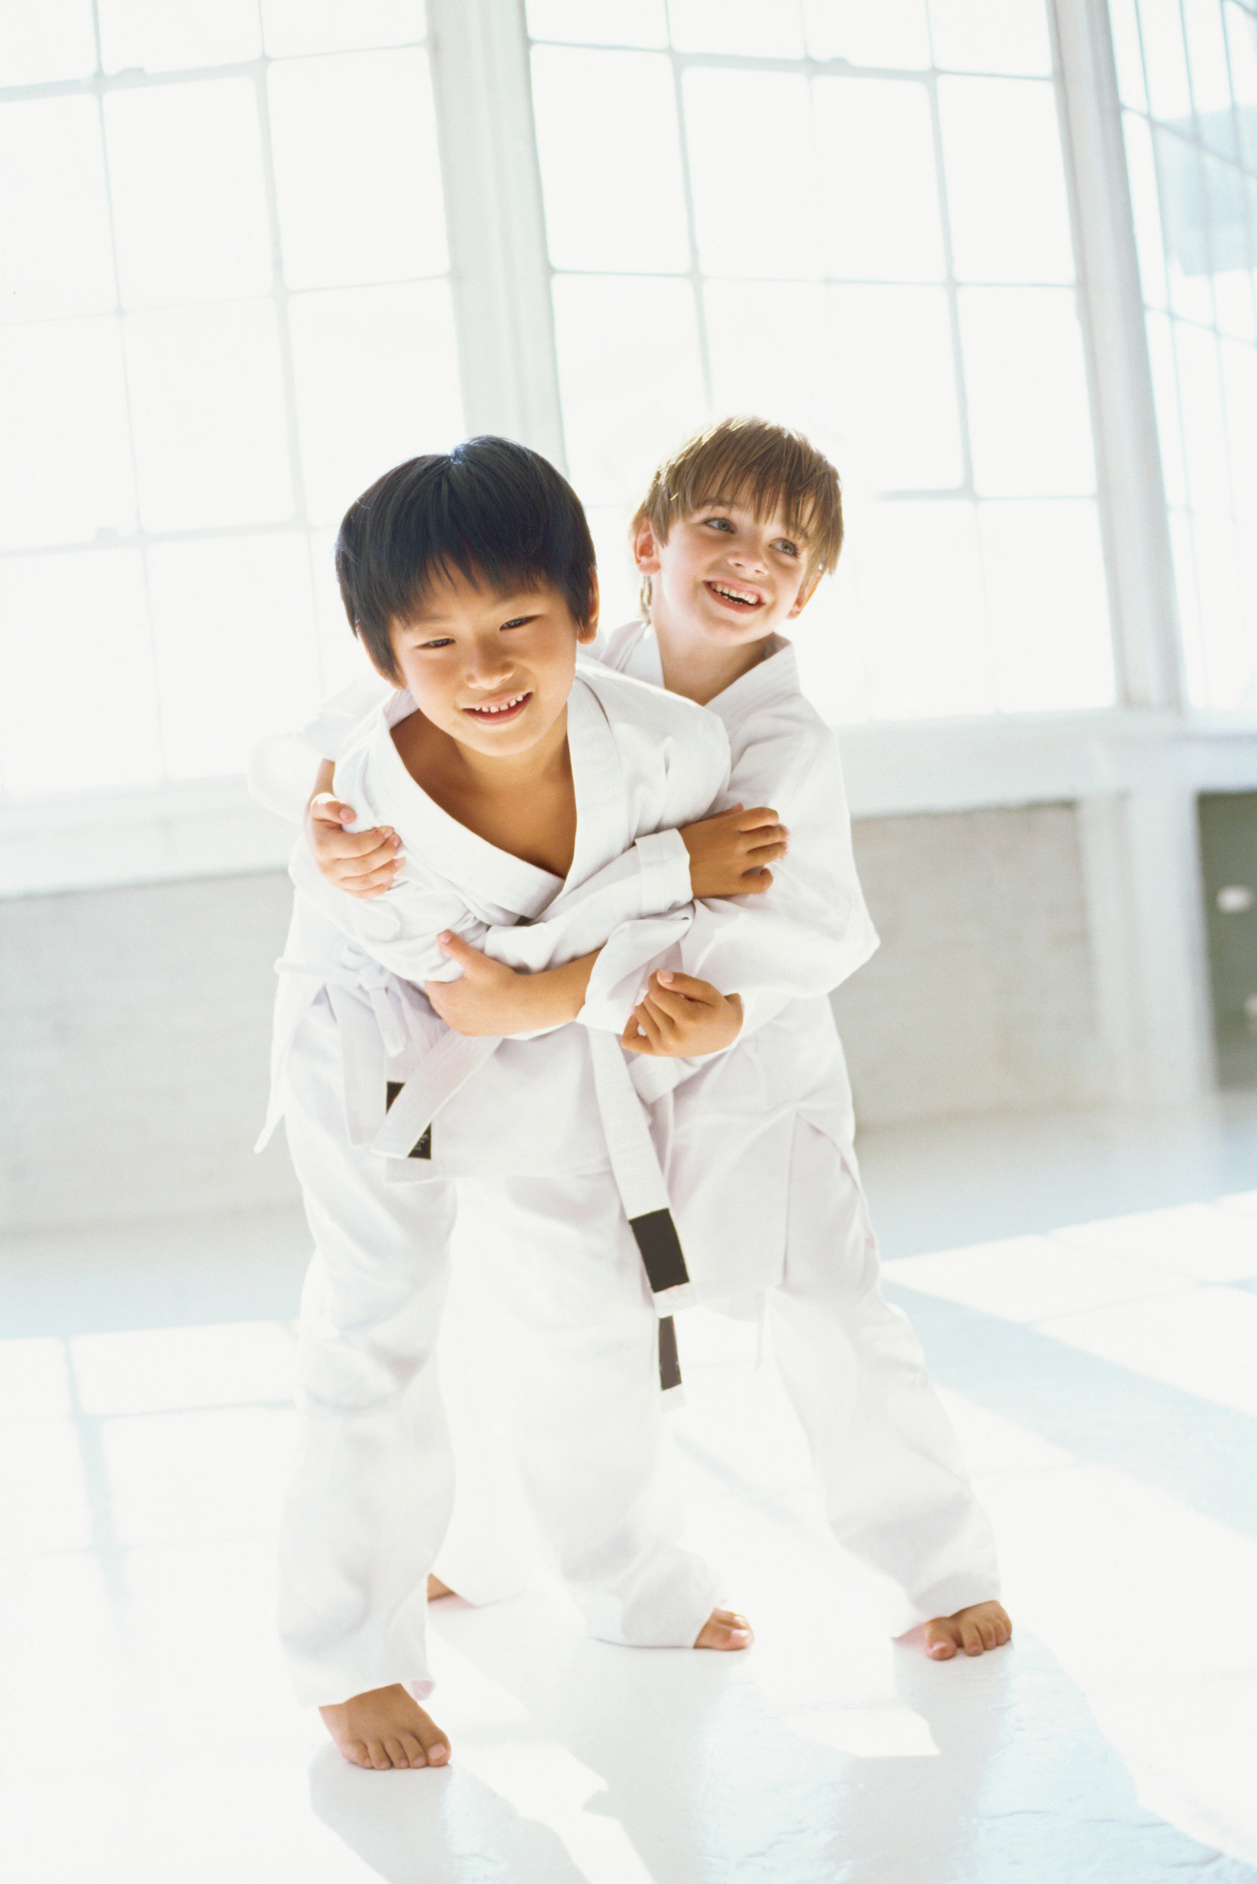 two boys practicing judo